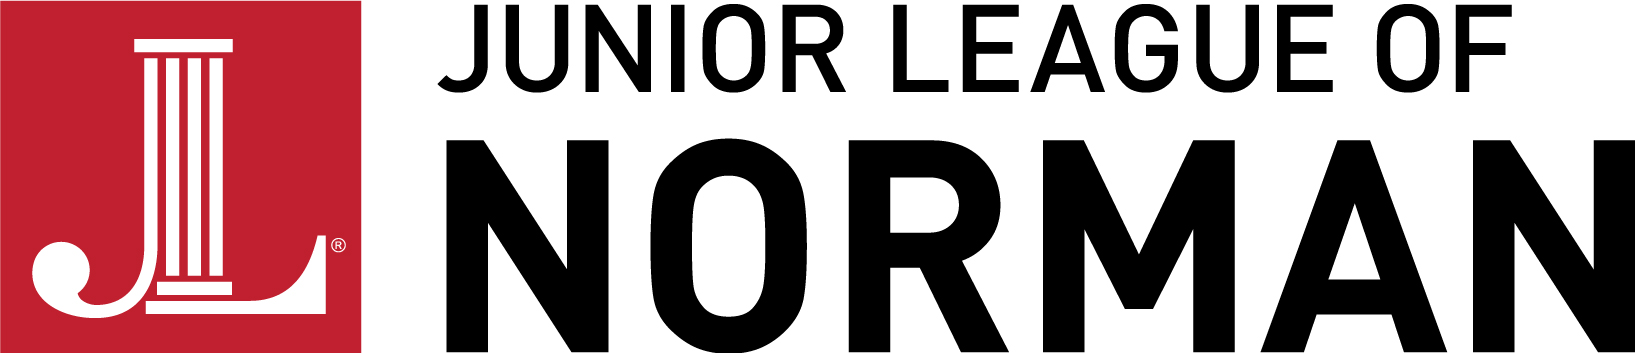 Junior League of Norman